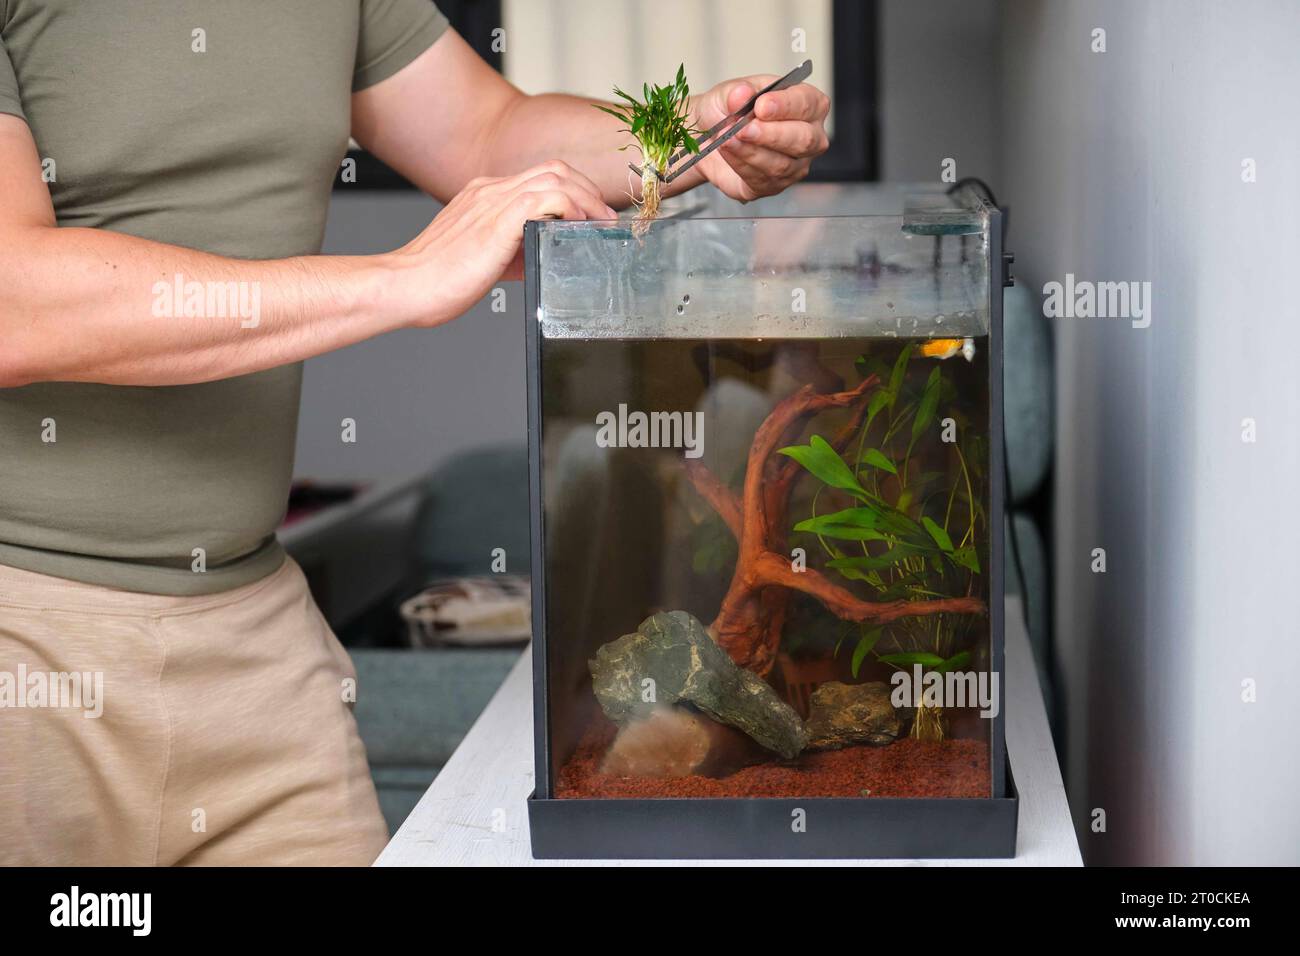 Man hands planting new water plant, Cryptocoryne Parva, using tweezers in aquarium at home. Stock Photo